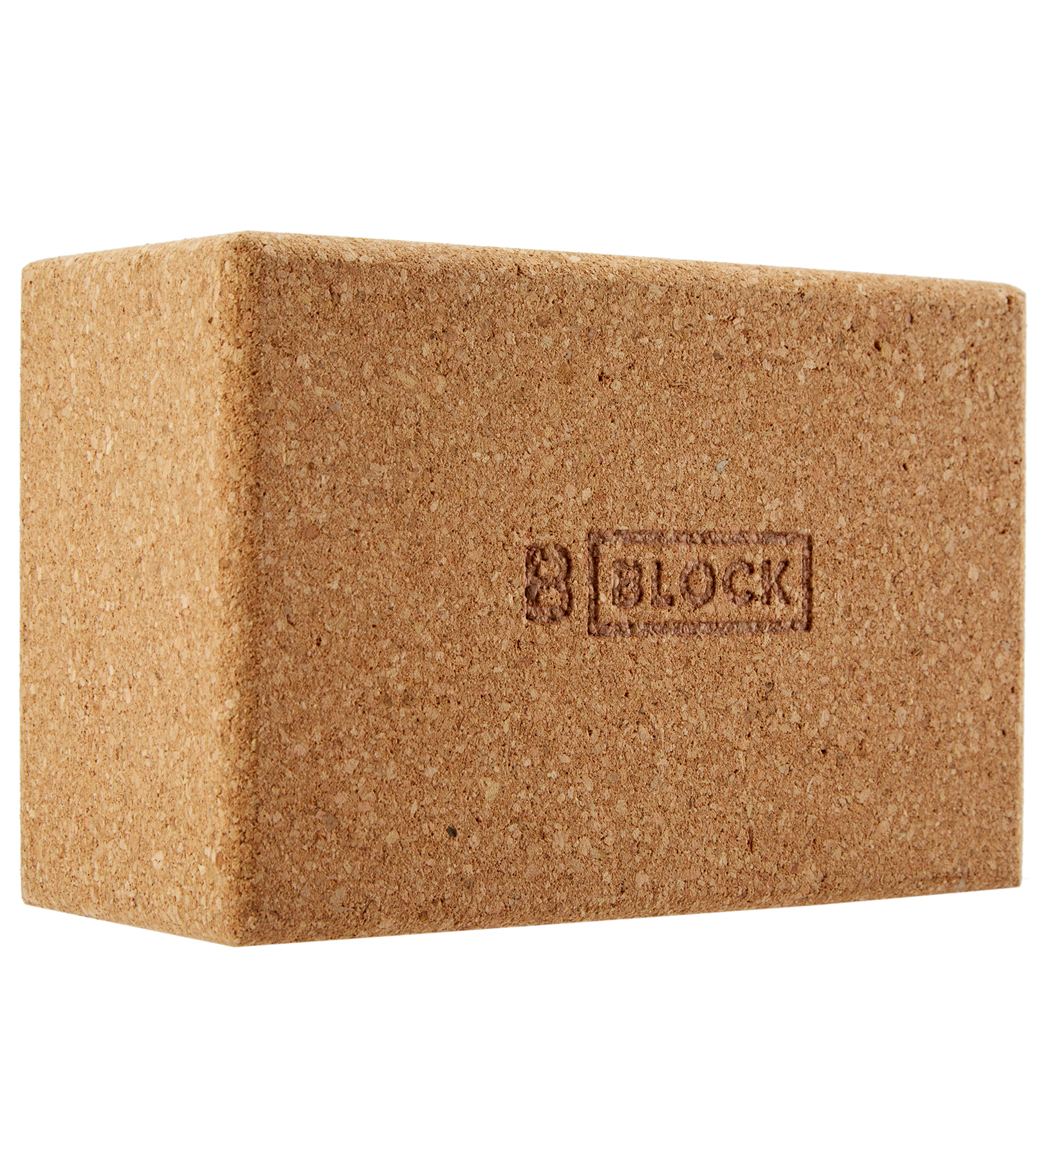 B Yoga Cork Yoga Block Standard 4 Inch at